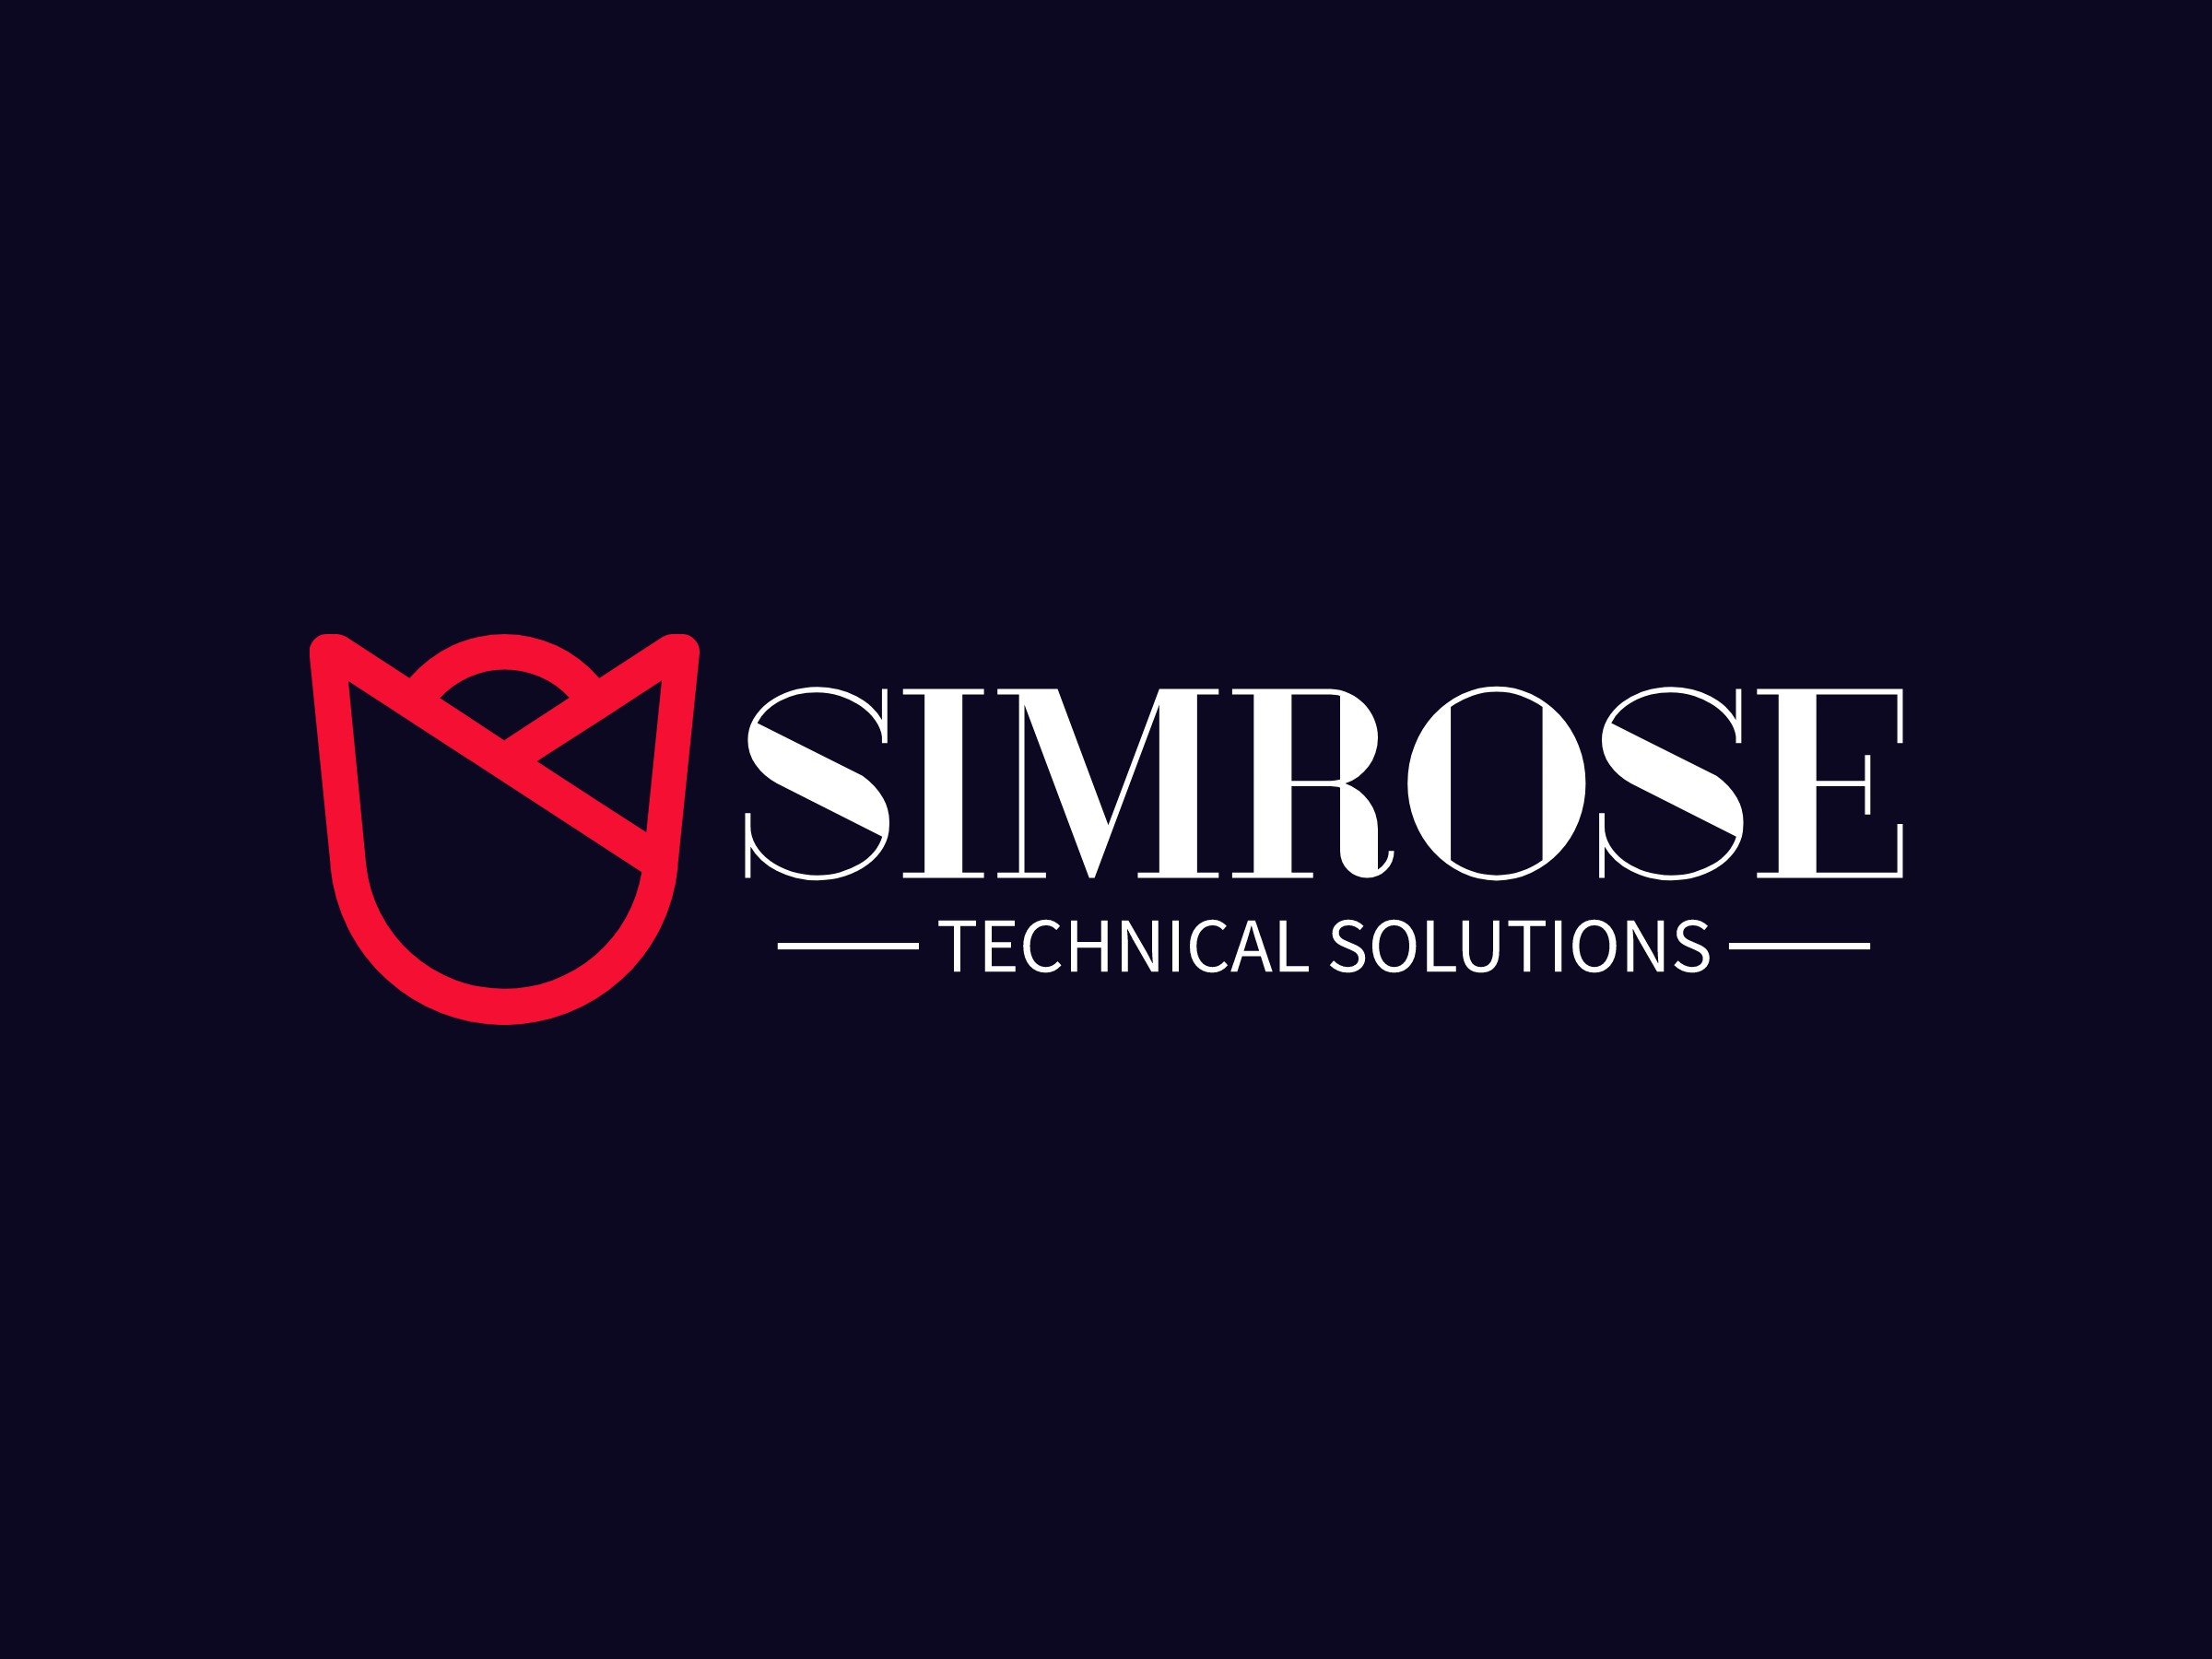 SIMROSE - Technical Solutions